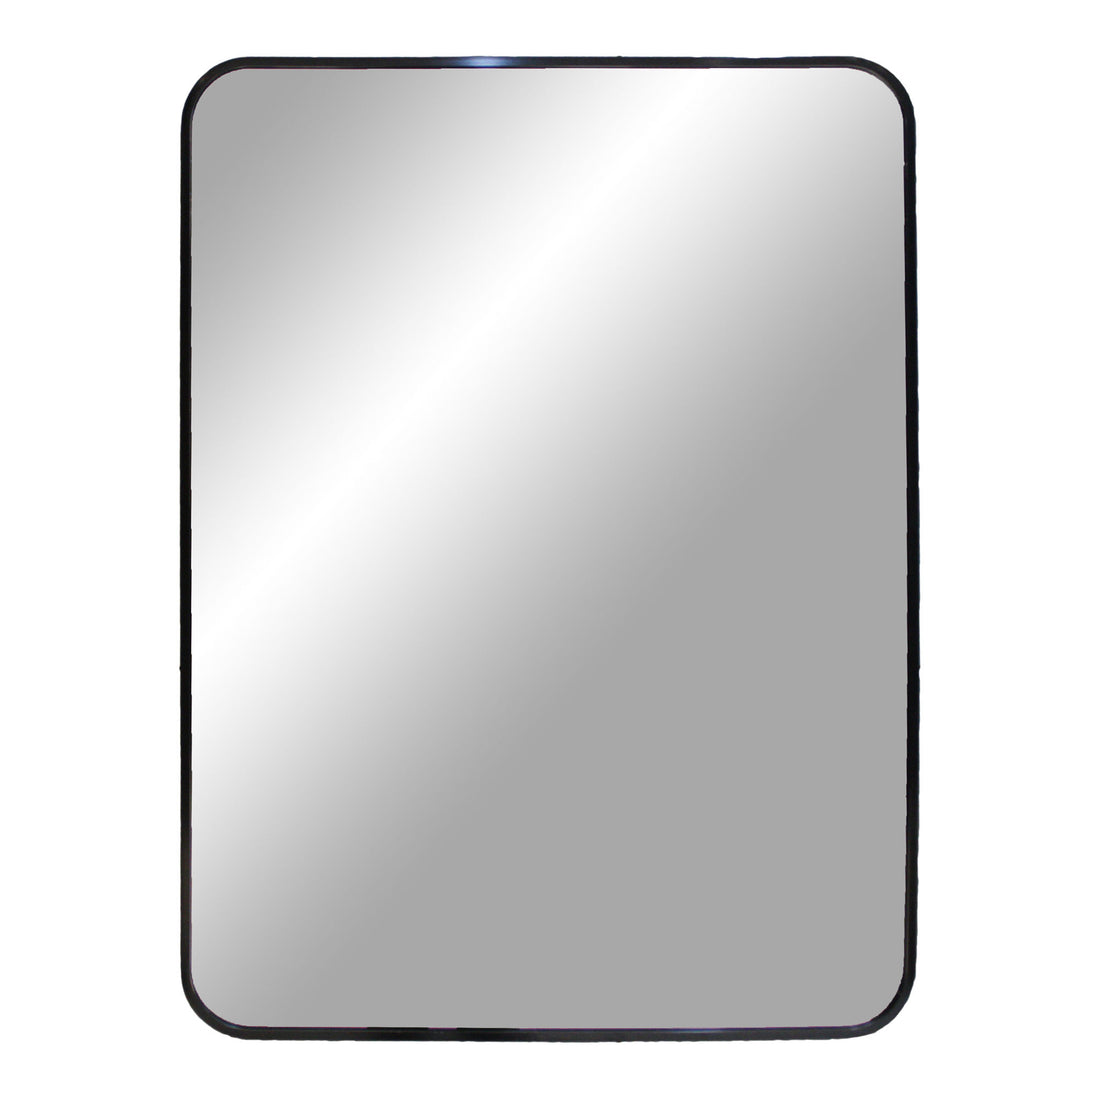 Madrid Mirror - Spiegel im Aluminium, schwarz, 50 x 70 cm - 1 - PCs